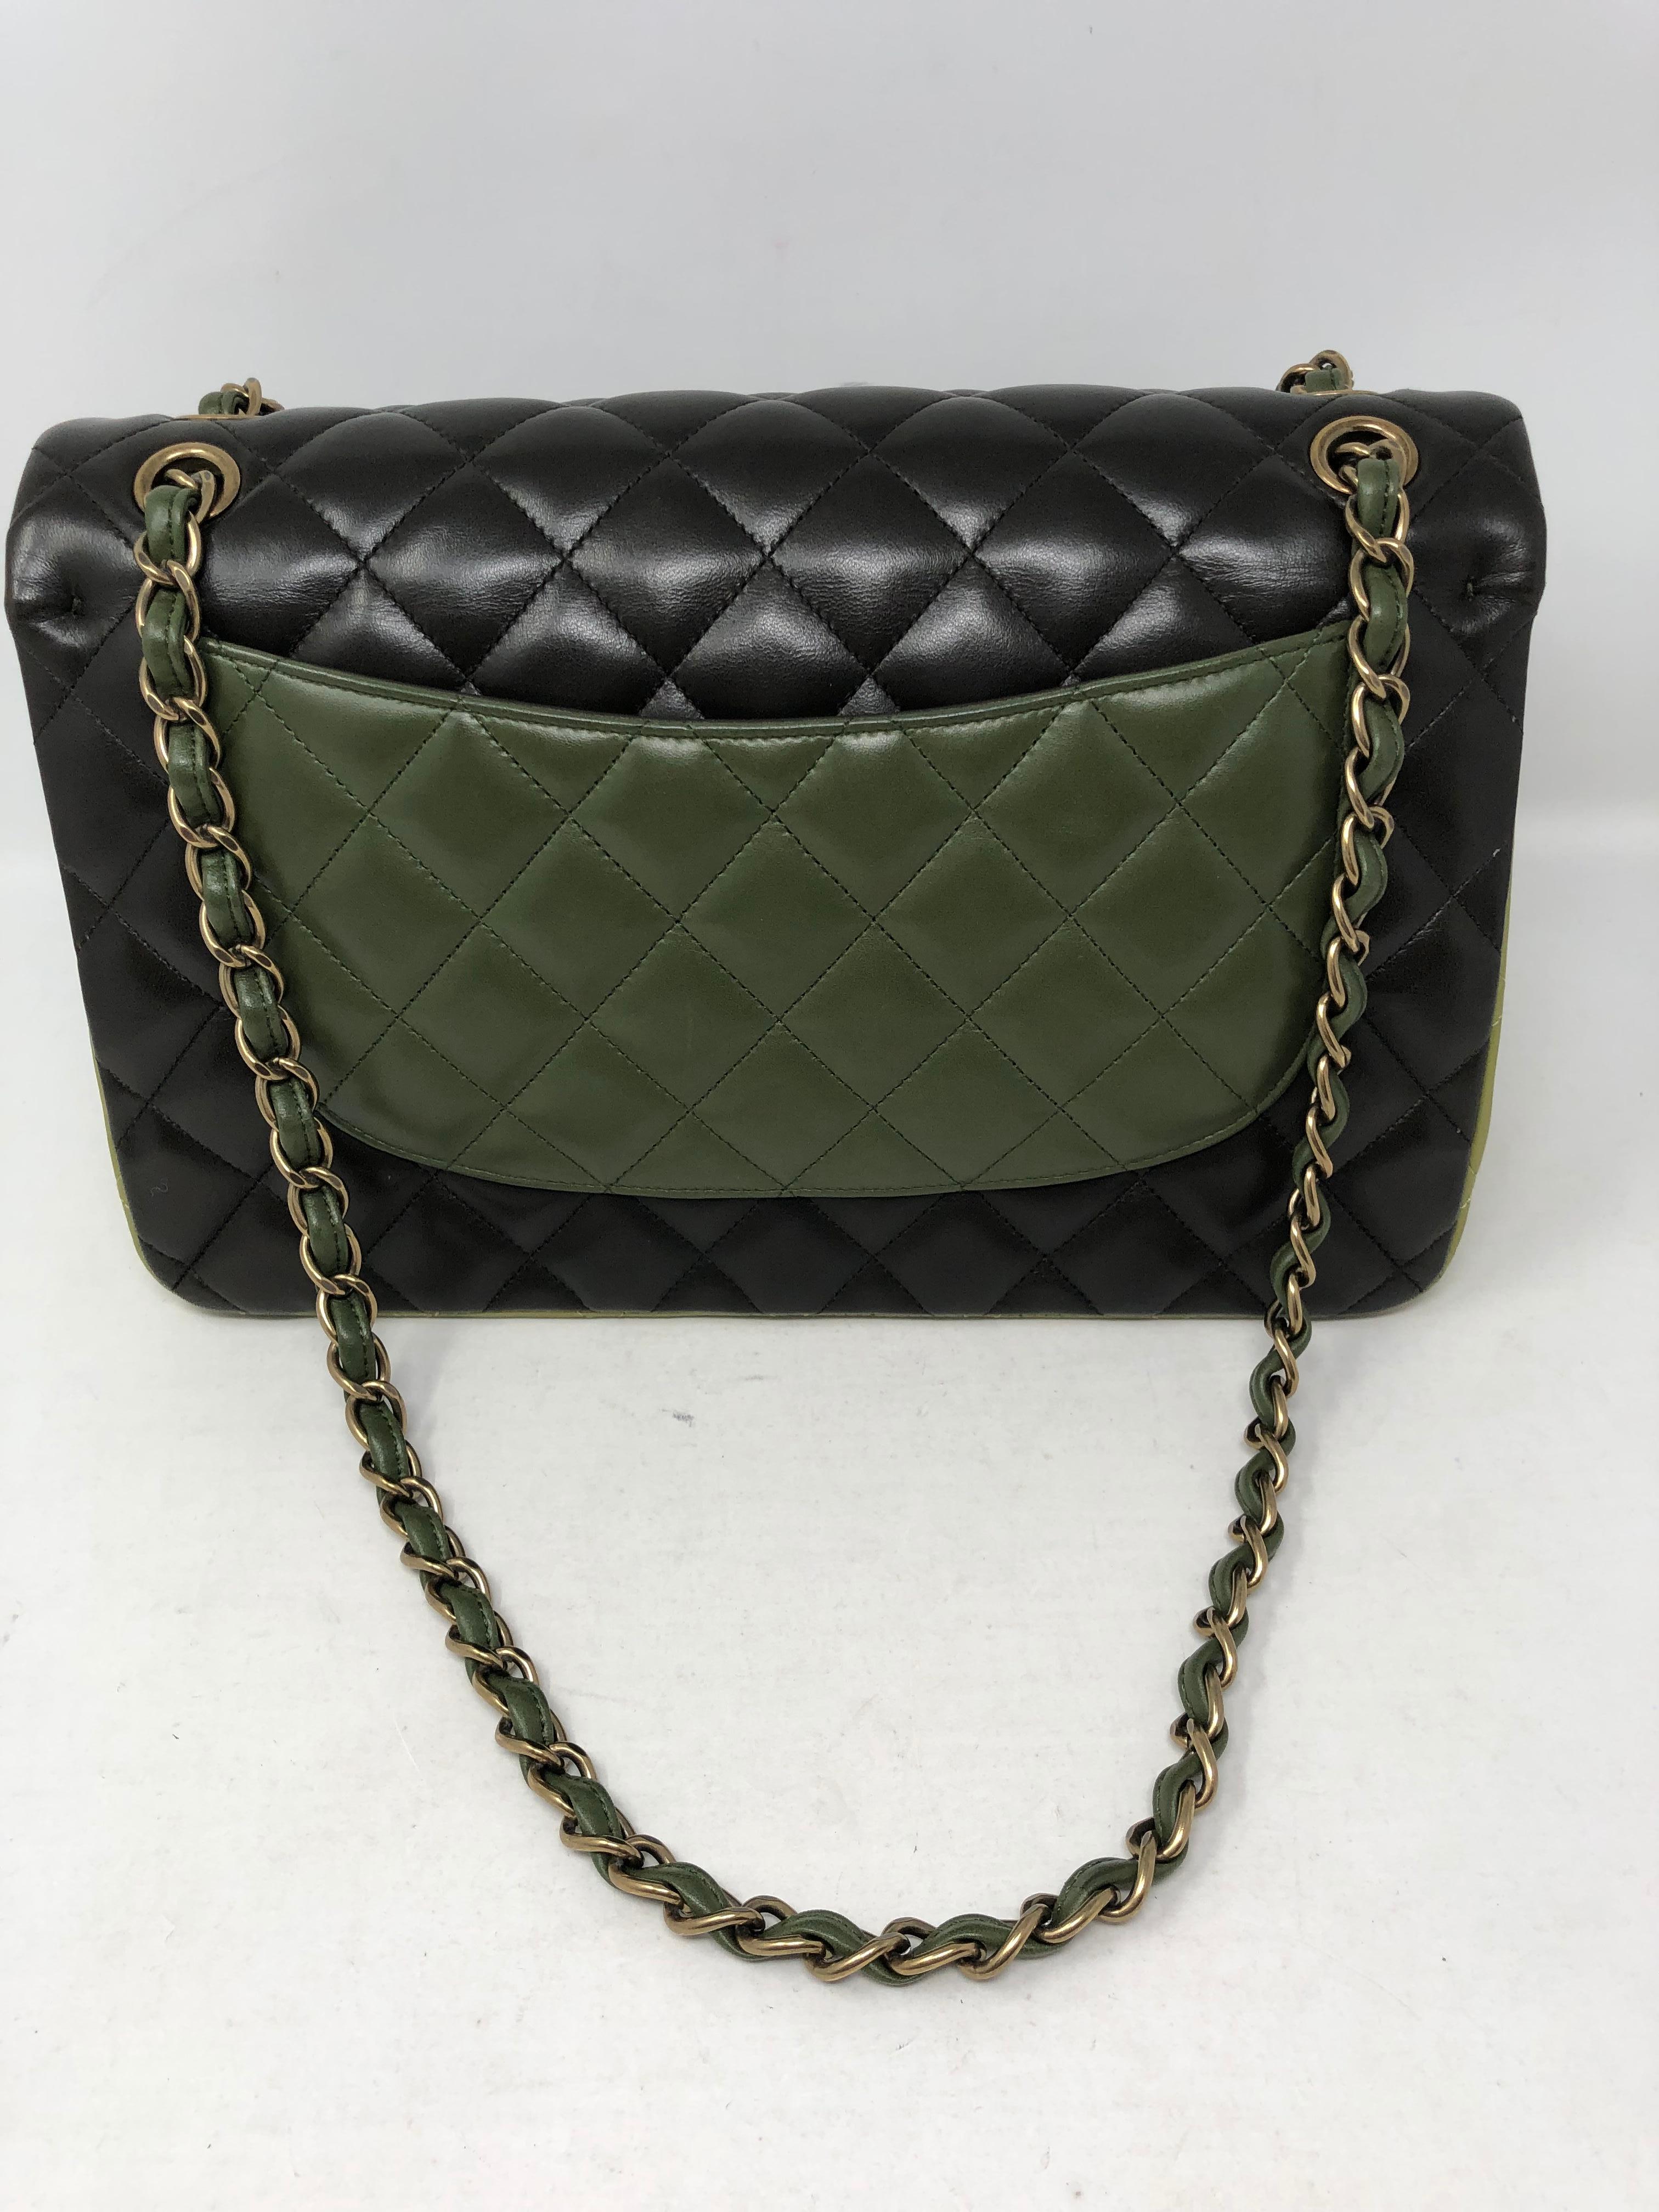 Chanel Multicolor Green Double Flap Bag für Damen oder Herren